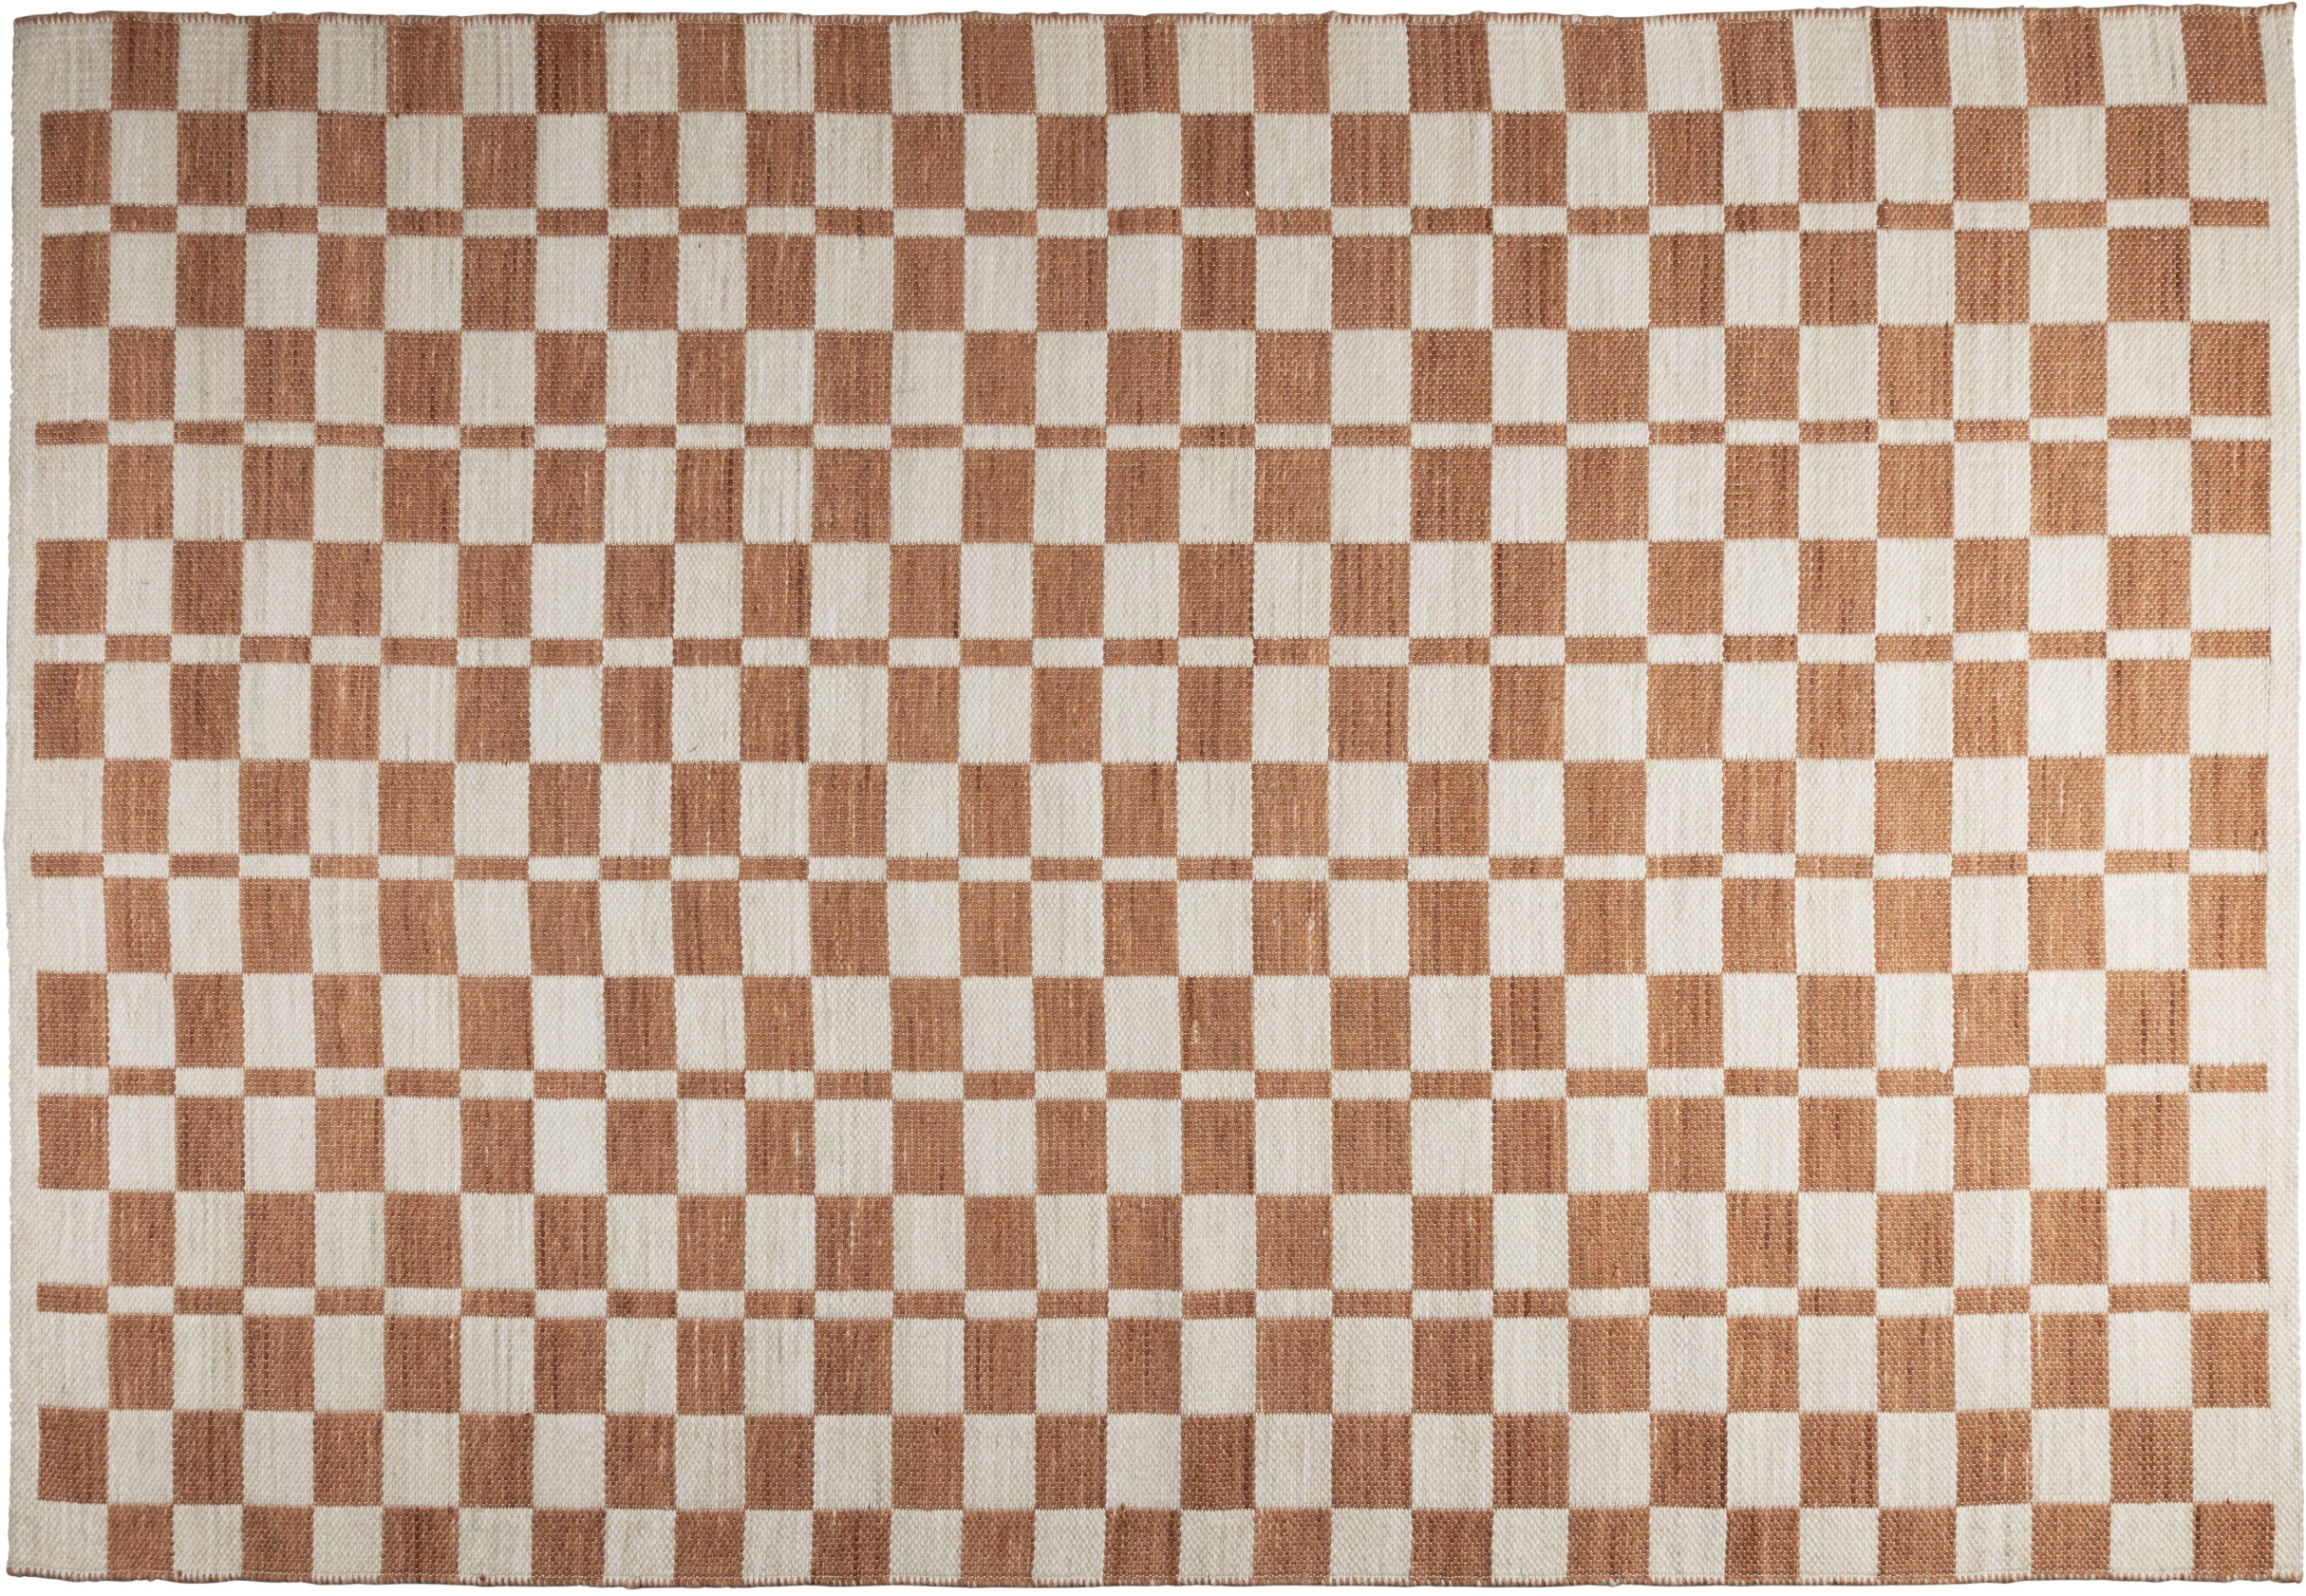 Zuiver Vloerkleed Checker 160 x 230cm - Terra